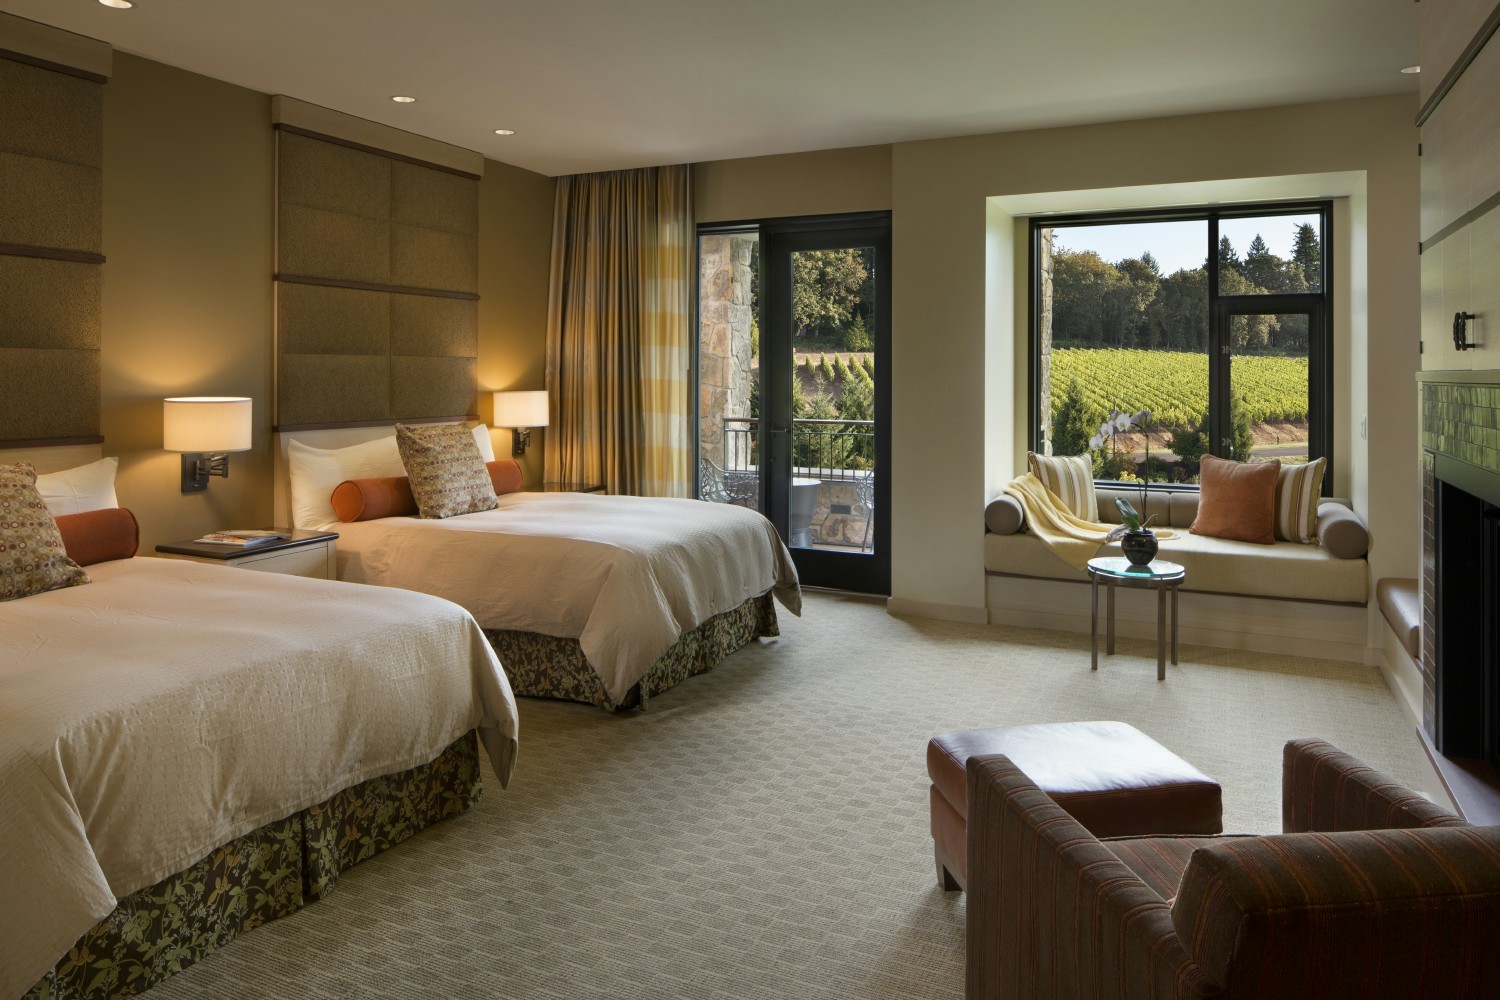 530 SF deluxe double queen room with vineyard views